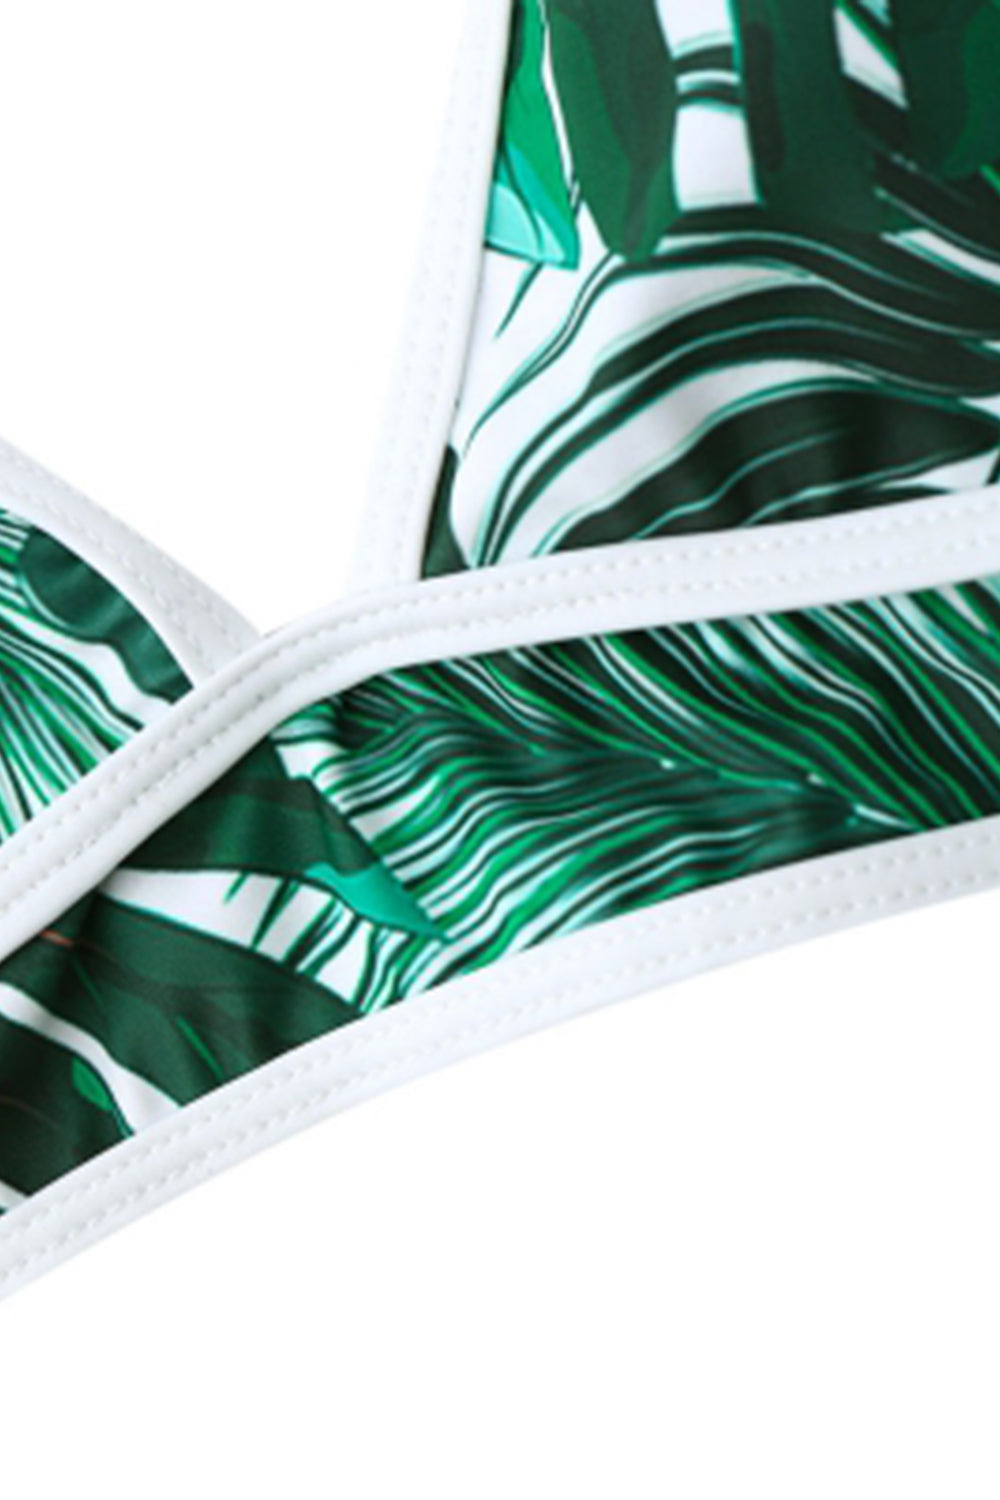 High Waist Tropical Leaf Print Bikini Set